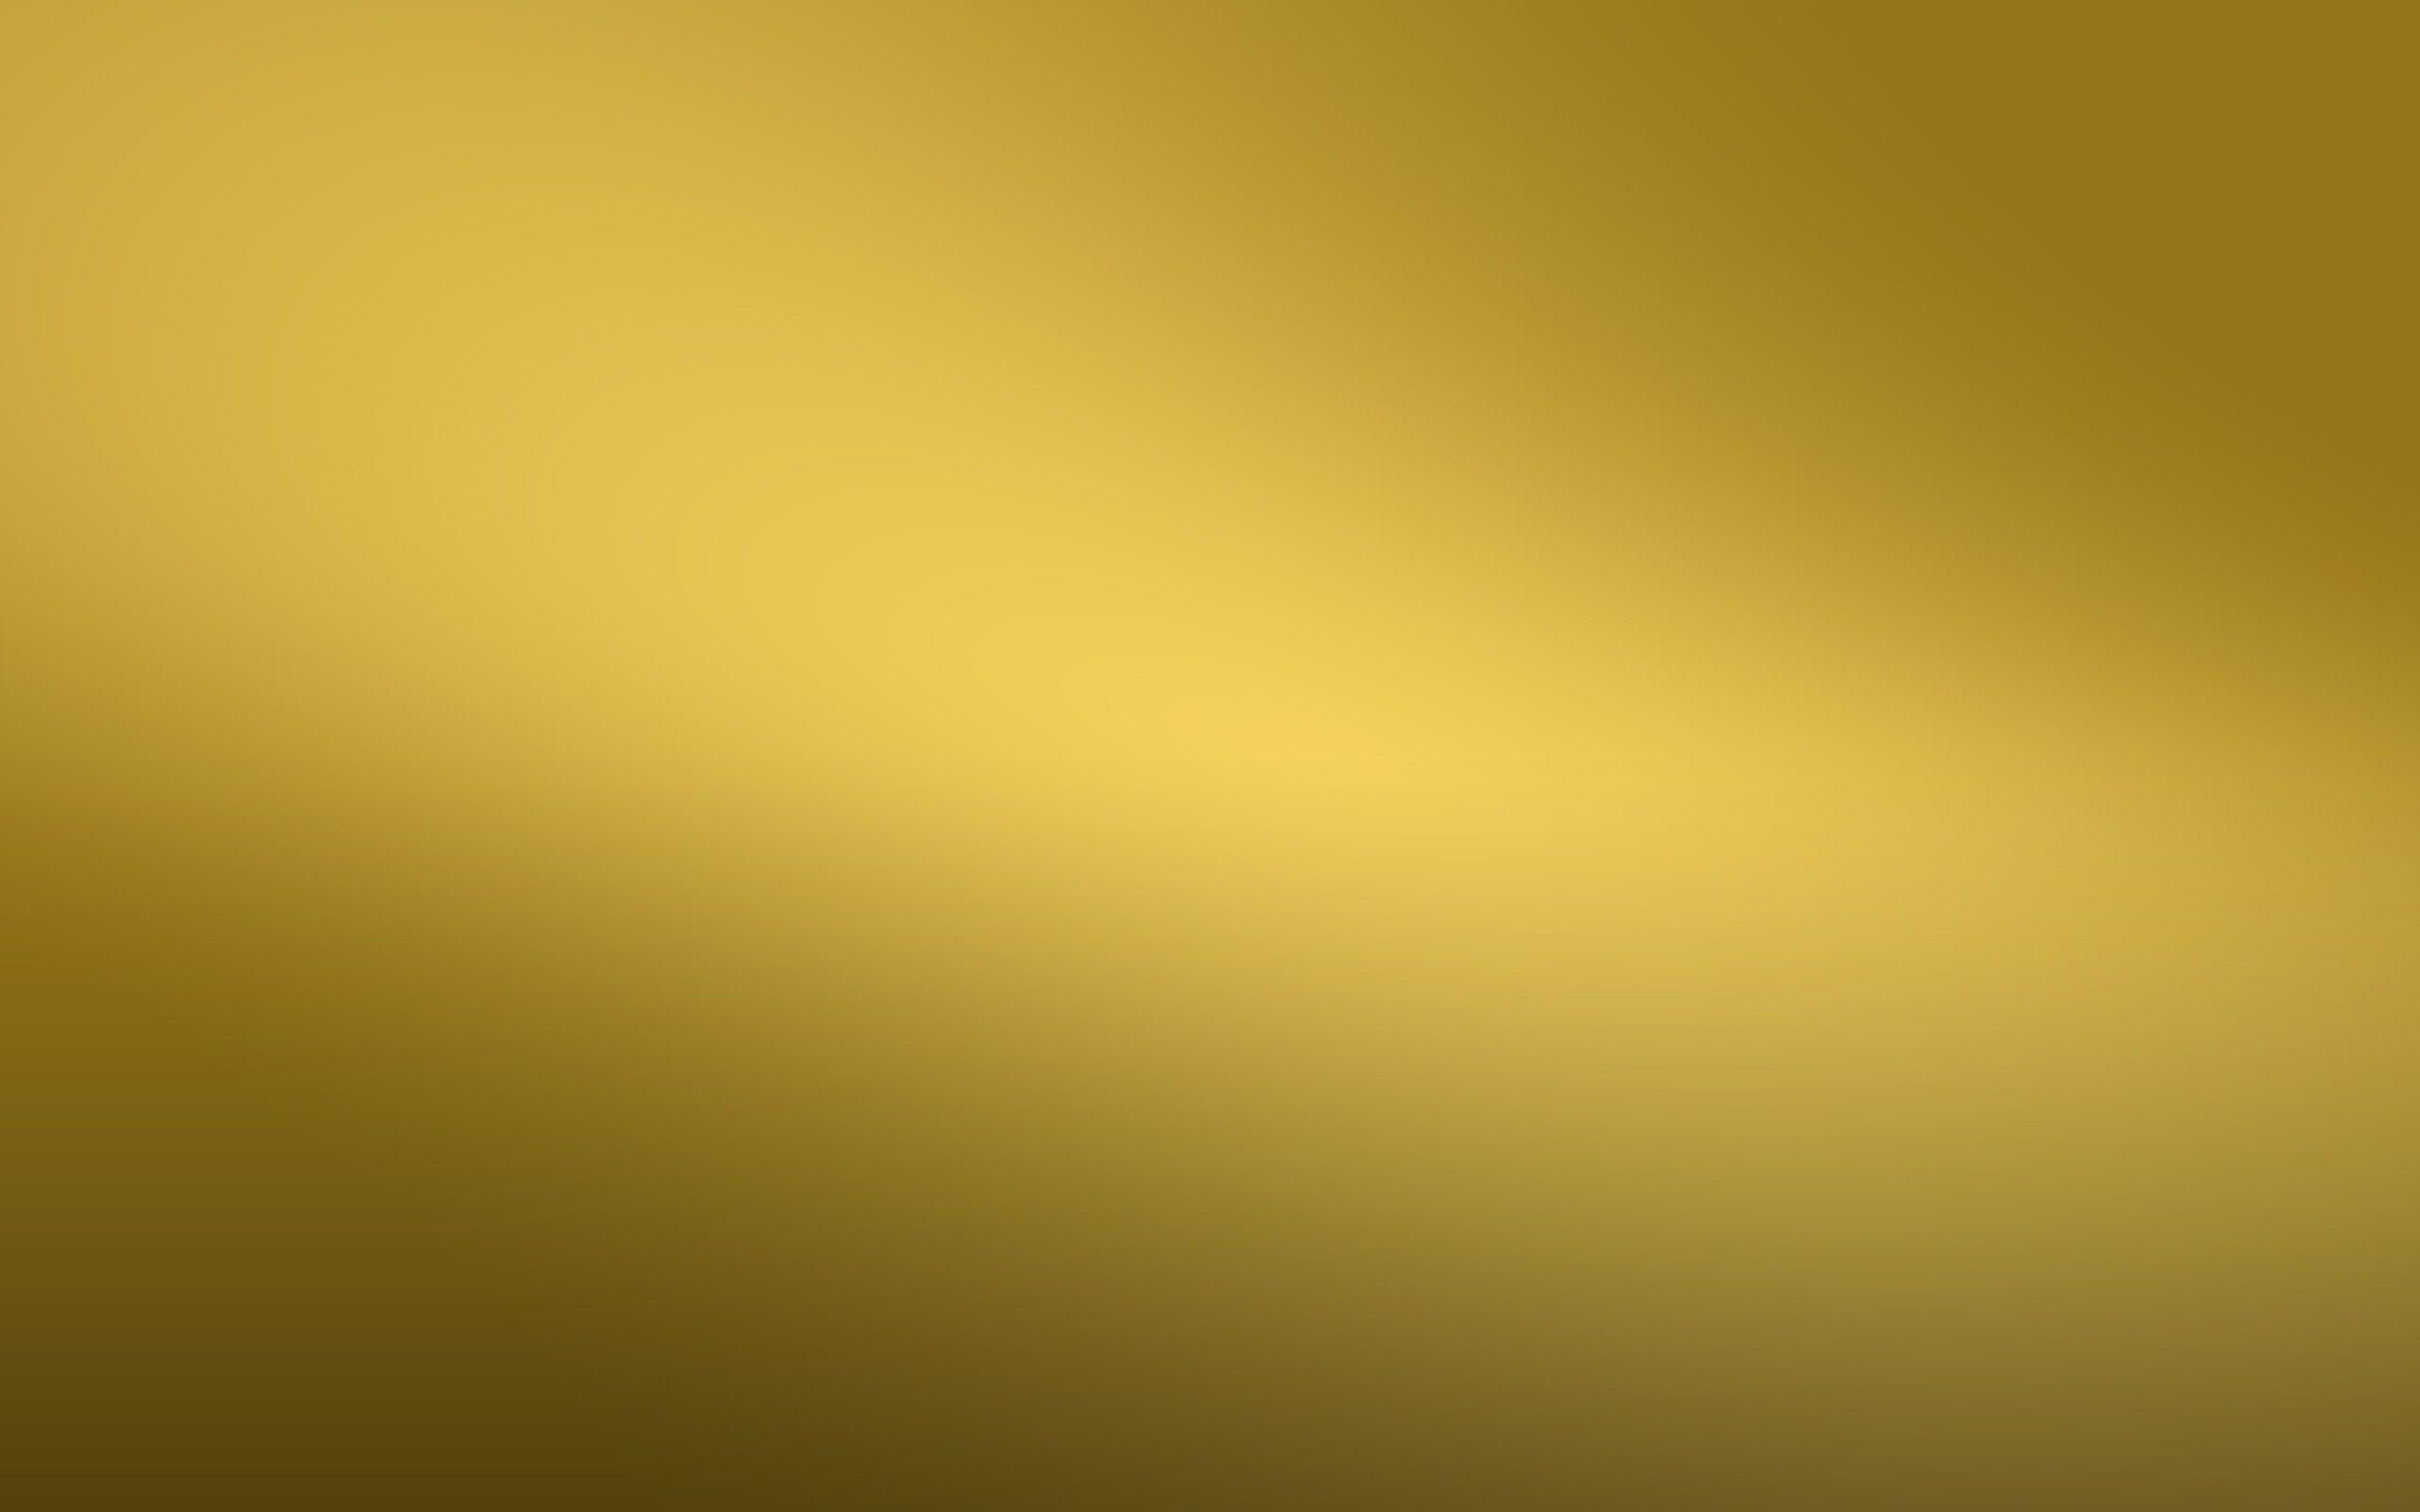 Gold Gradient Wallpaper Background 49494 2560x1600 px